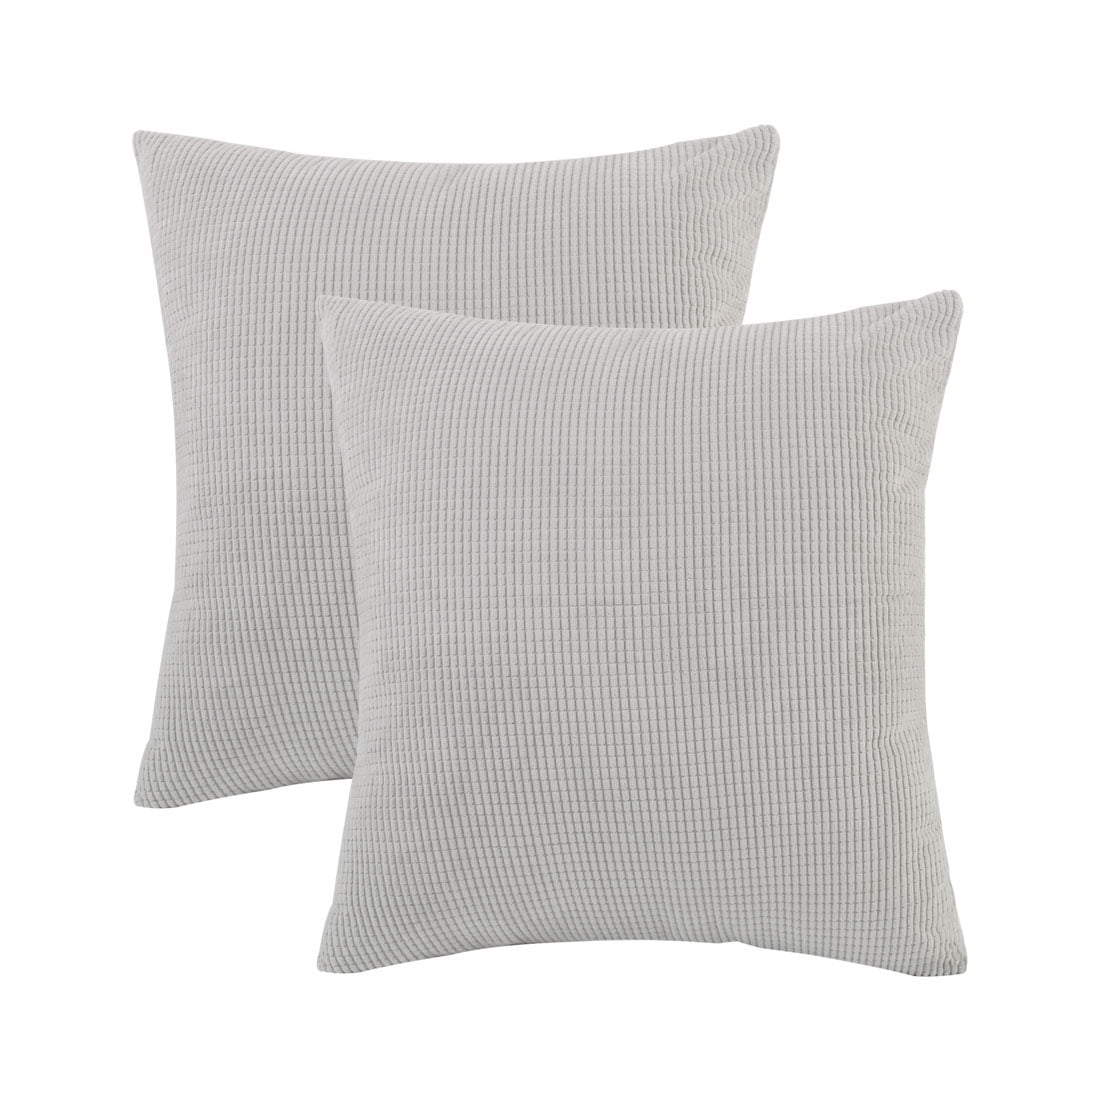 outdoor pillow covers walmart